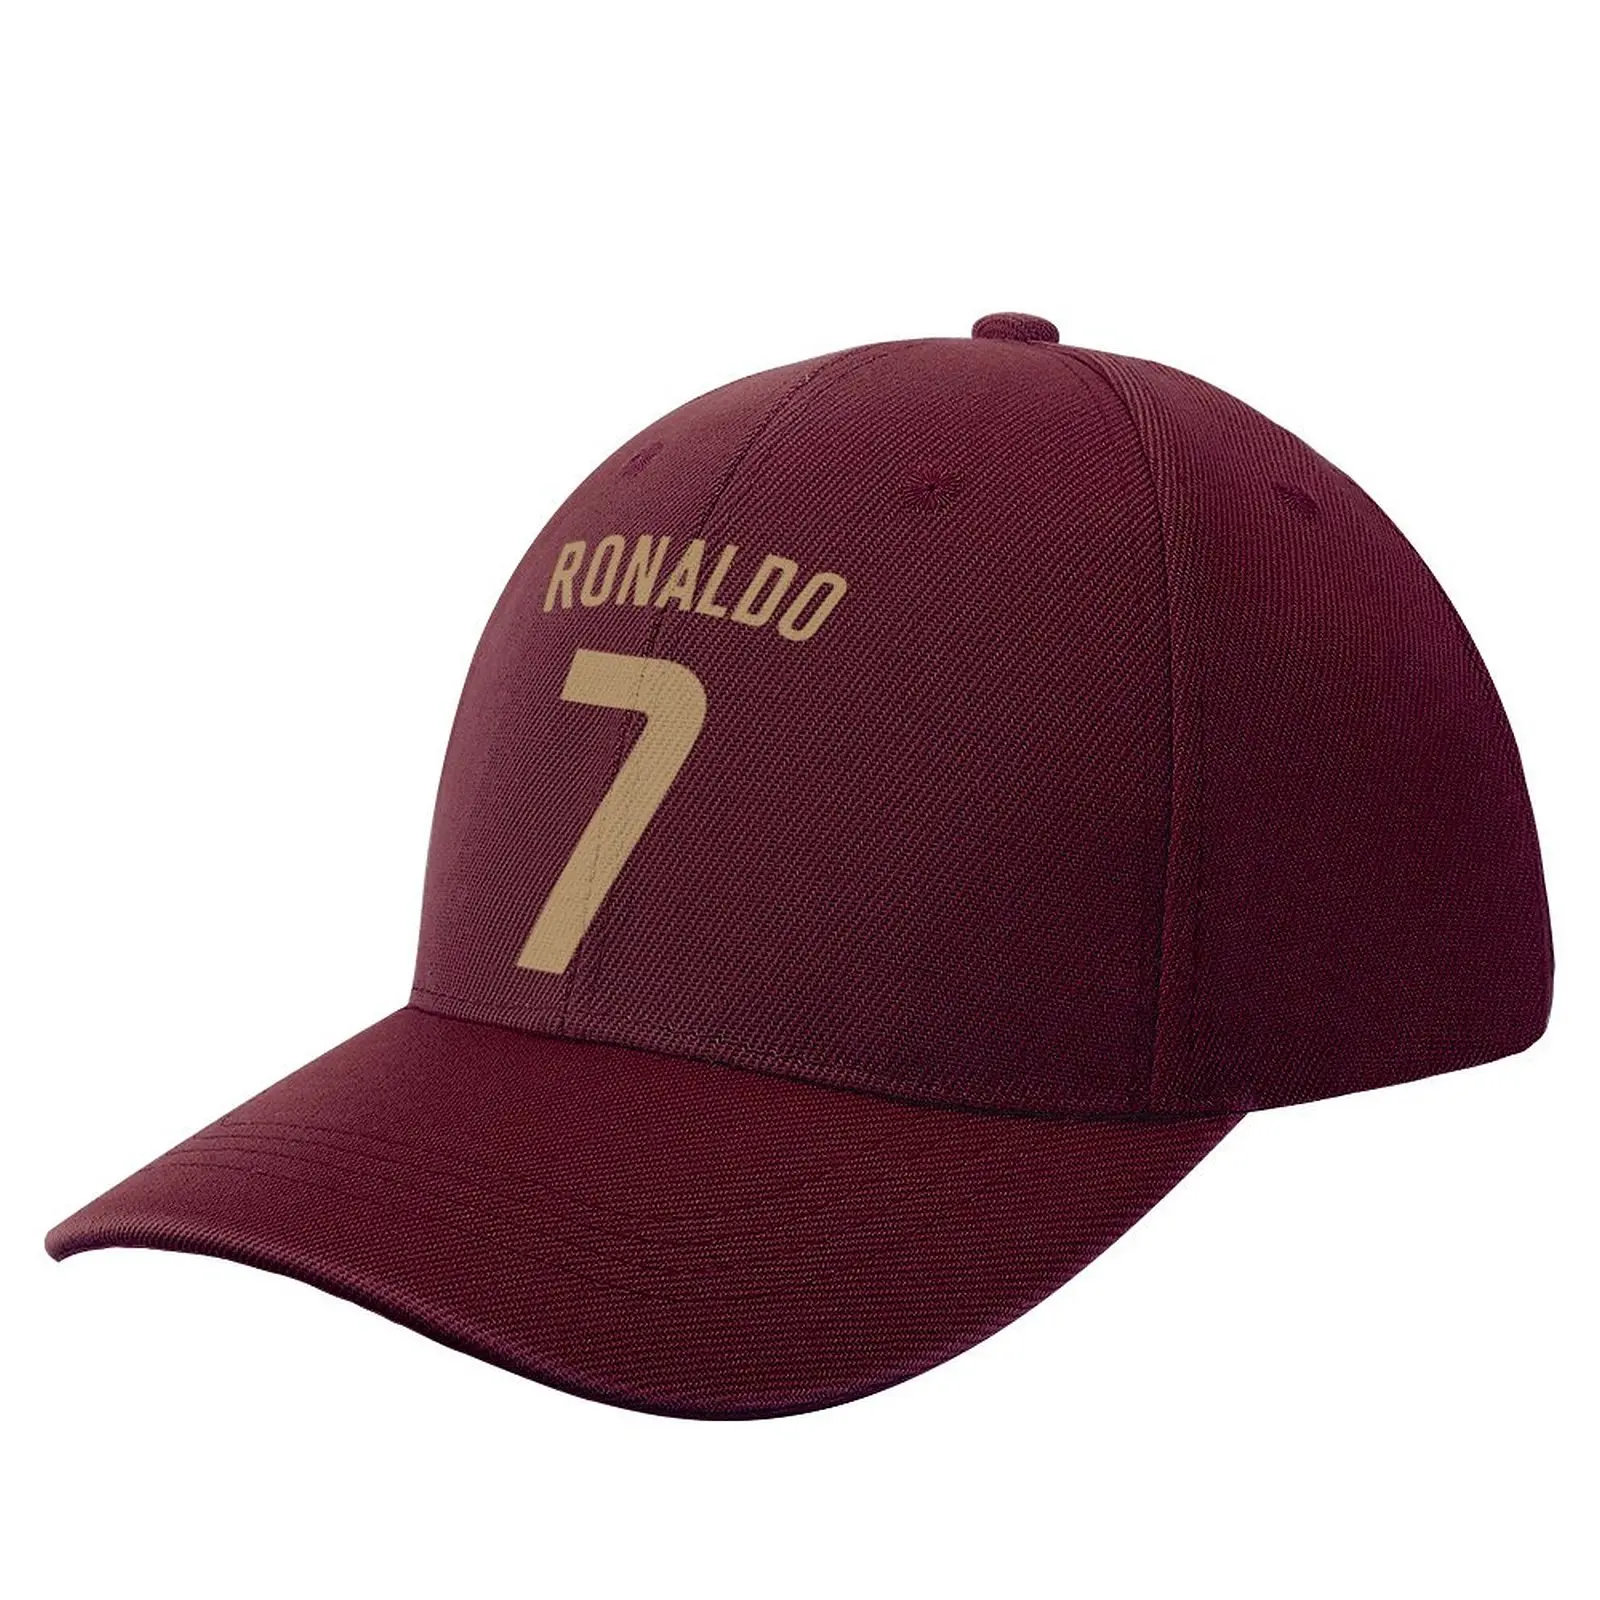 

Men Women Hat 7 Cristiano Ronaldo Baseball Cap Wild Sun Shade Peaked Hats Adjustable Caps for Fans 100% Polyester